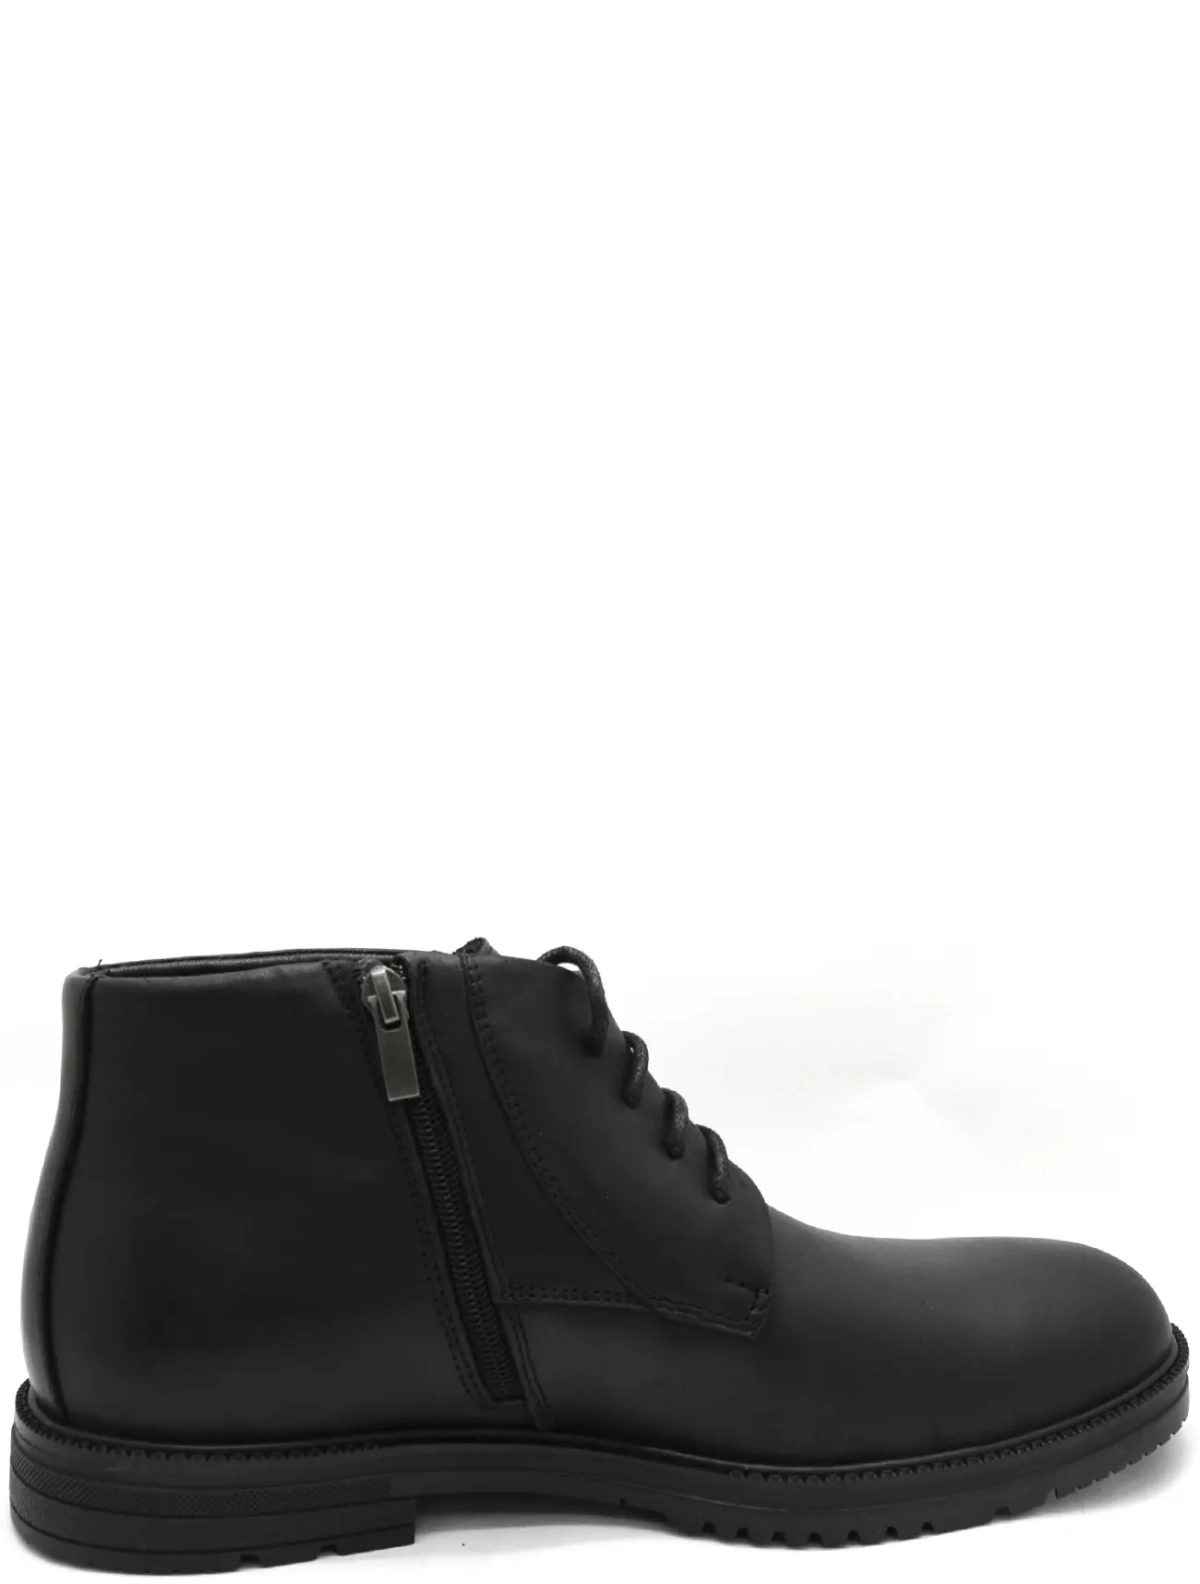 Baratto 1-672-110-4 мужские ботинки